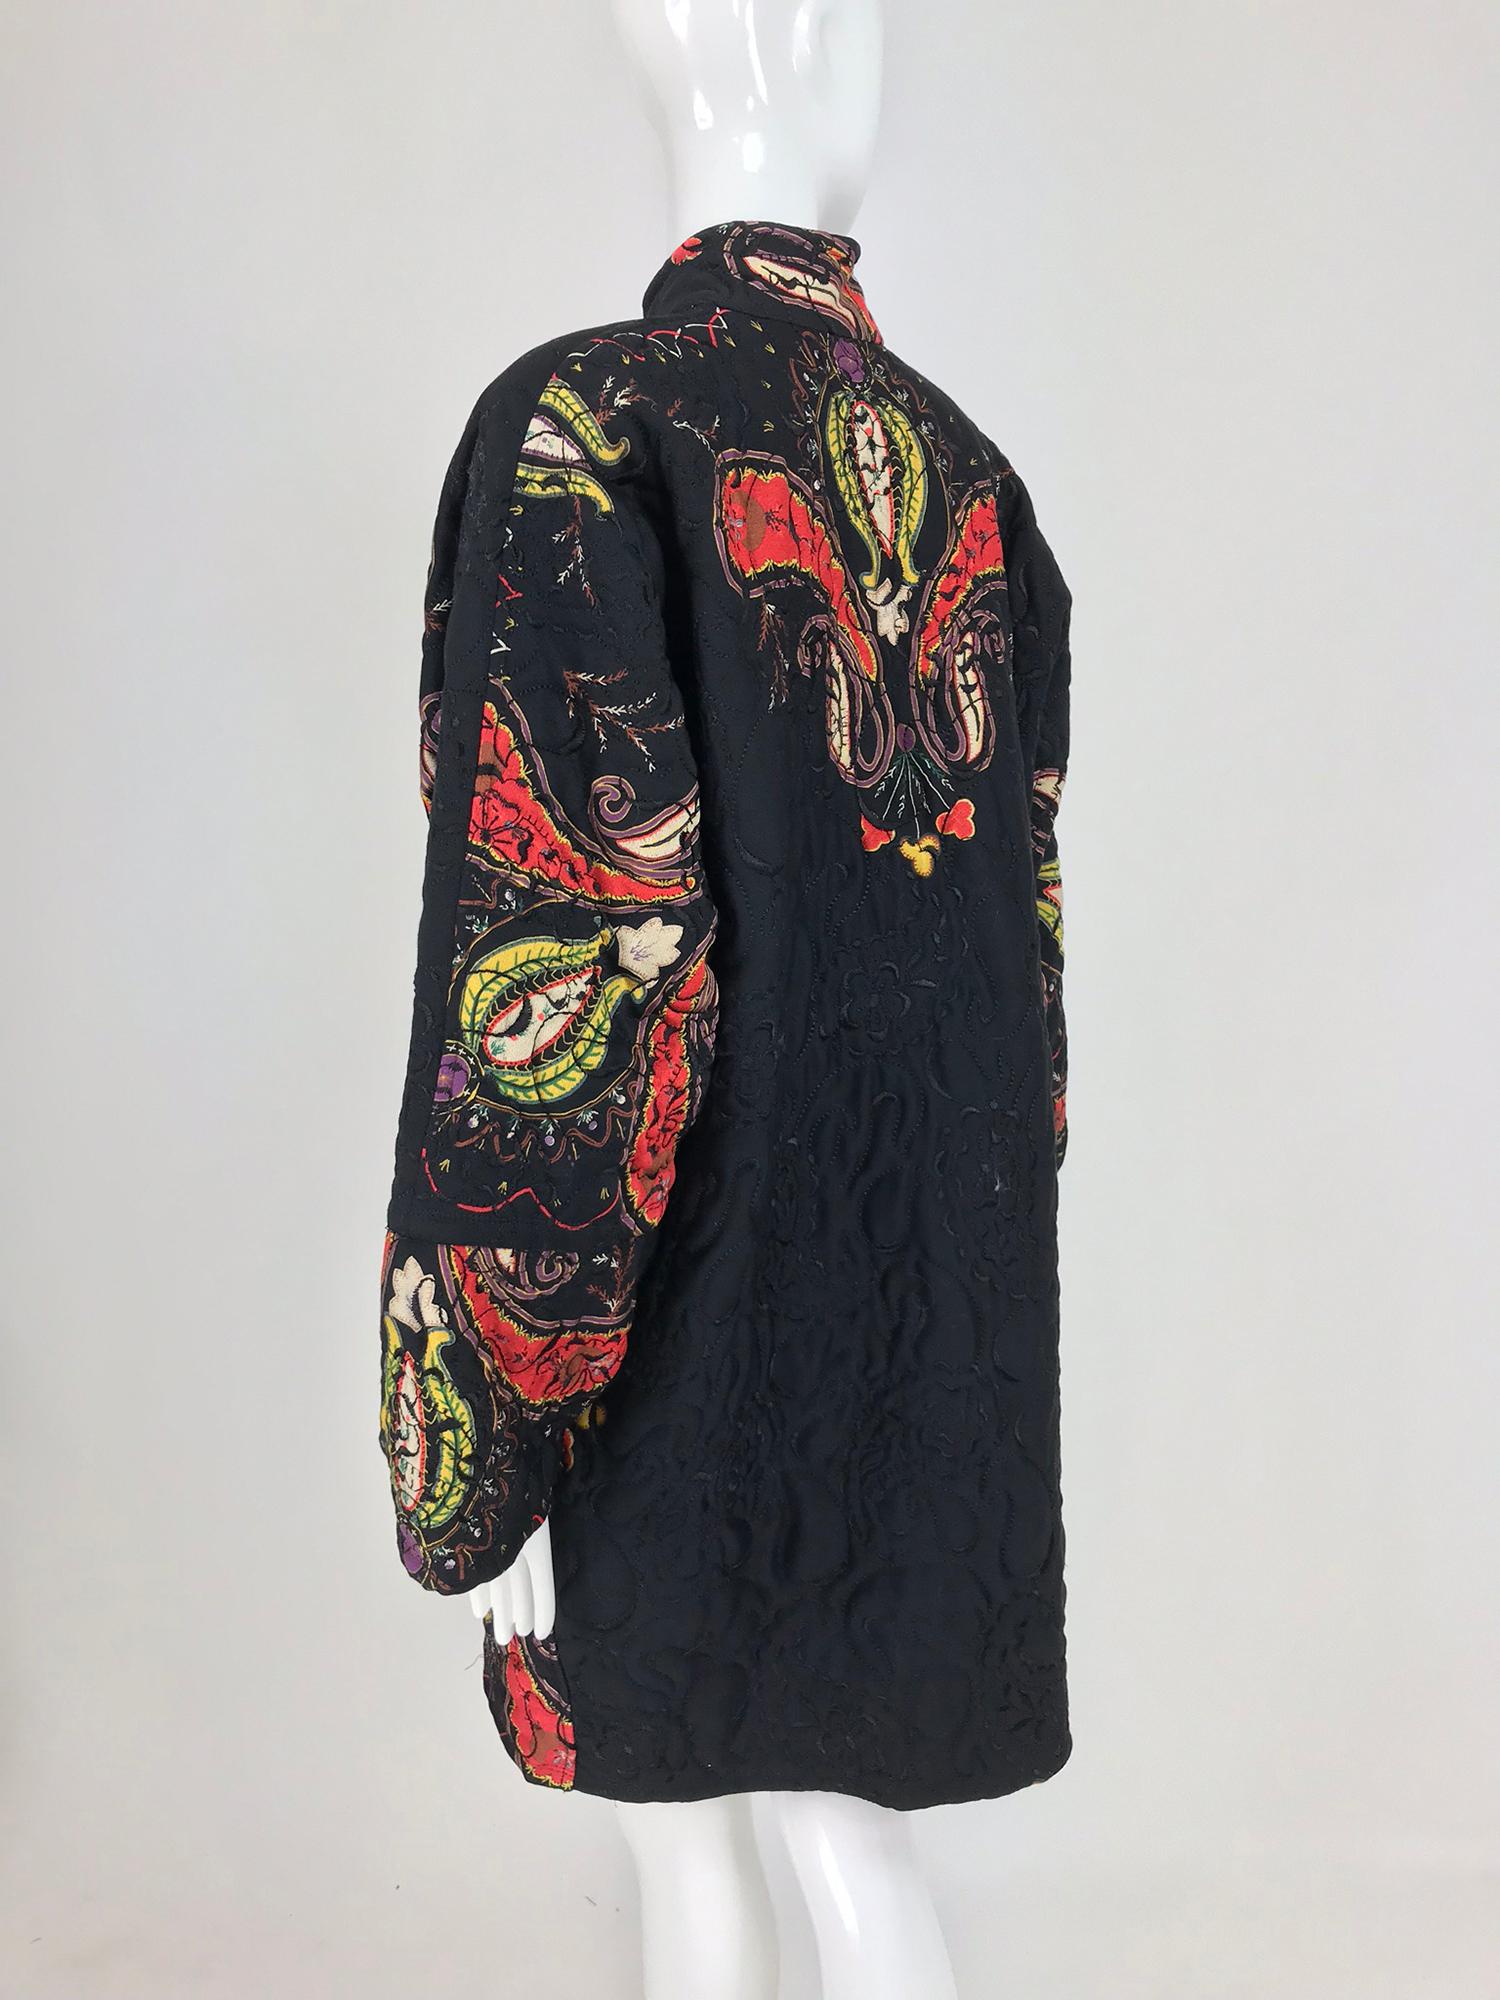 Women's Ungaro Parallele Applique Quilted Coat 1980s